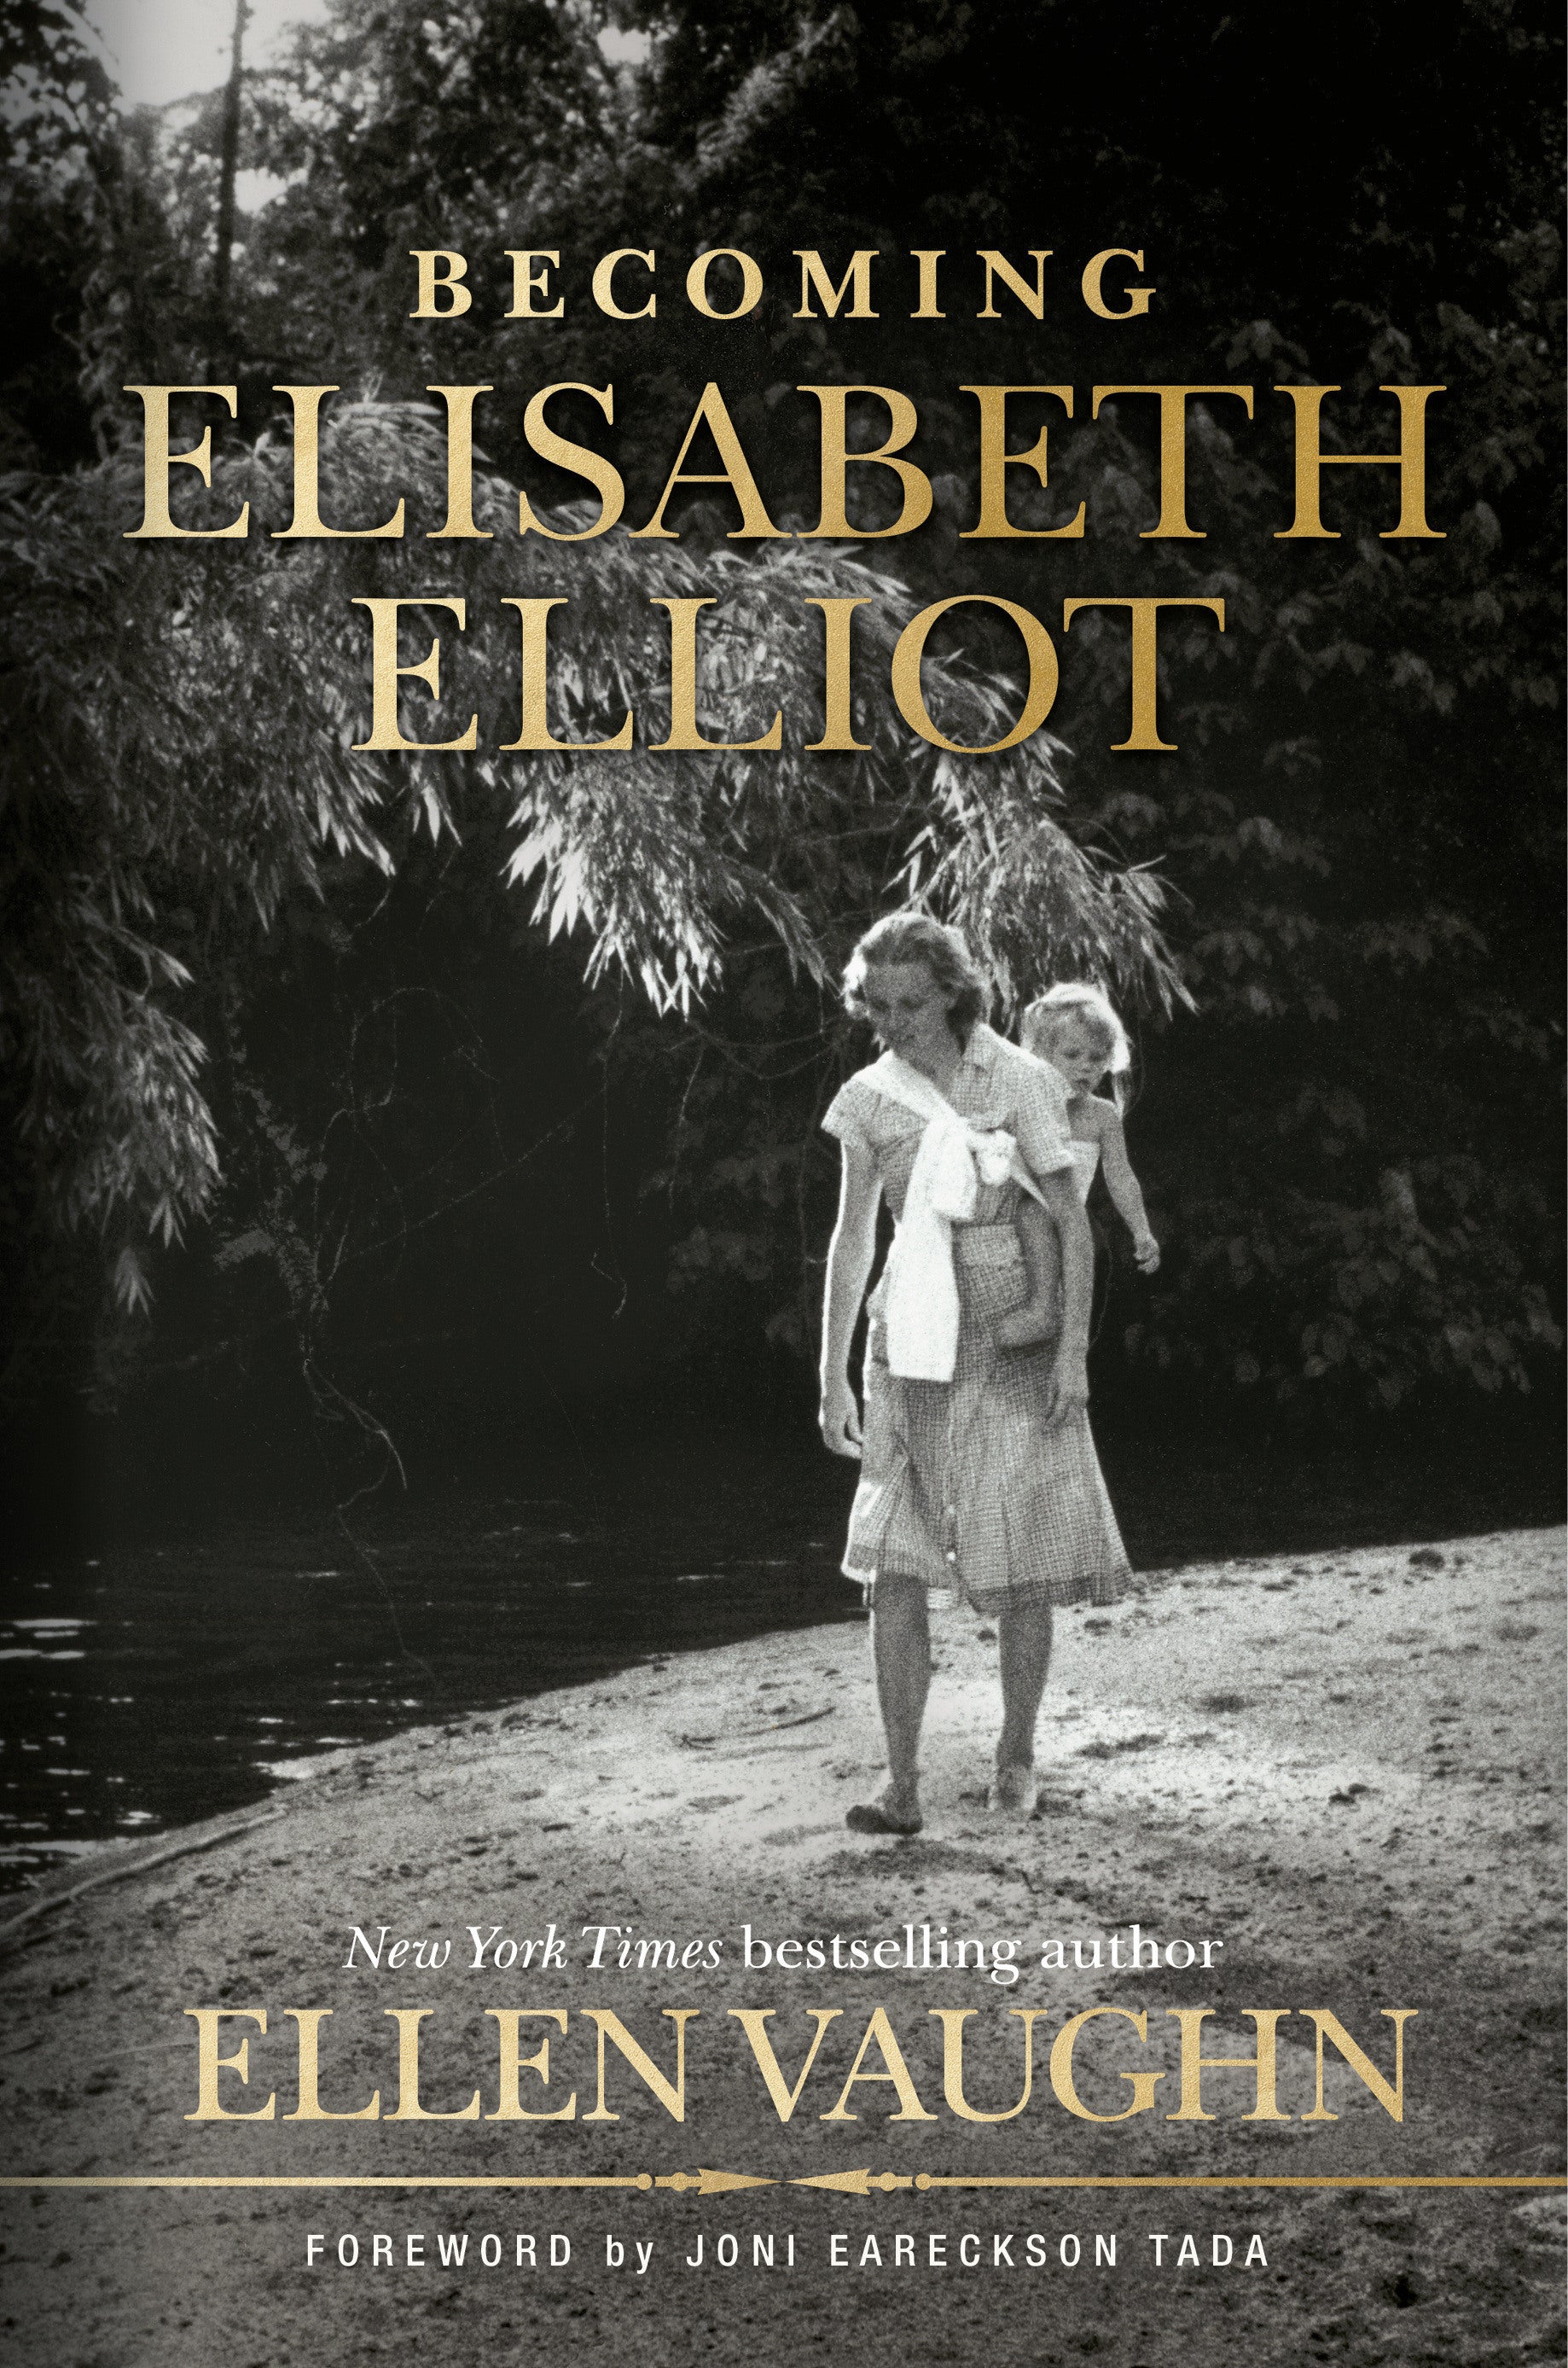 Image of Becoming Elisabeth Elliot other